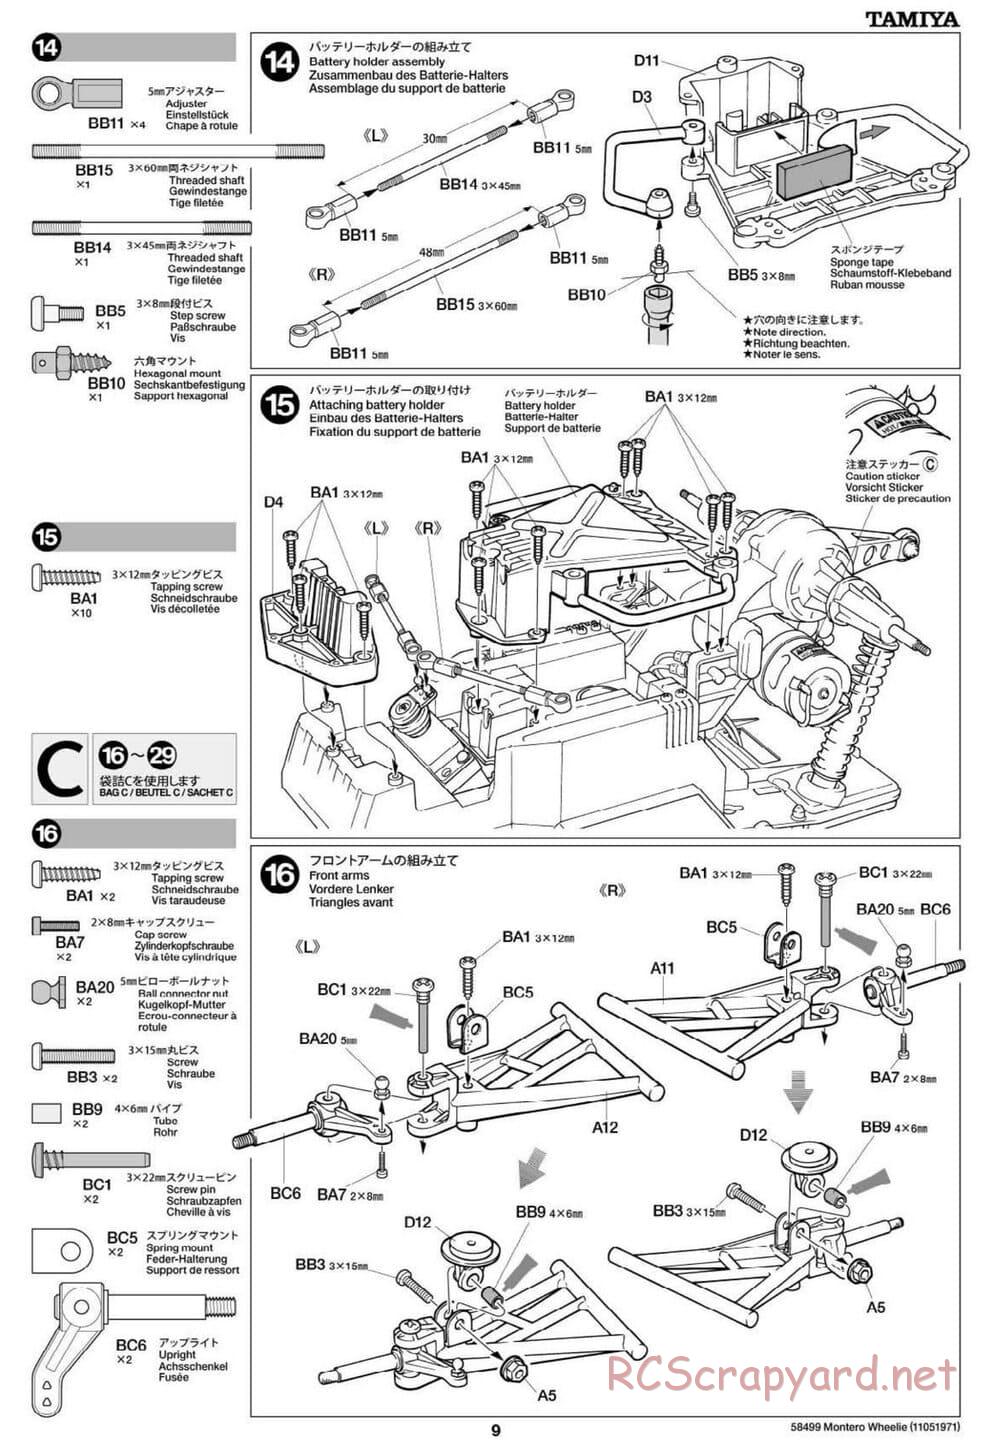 Tamiya - Mitsubishi Montero Wheelie - CW-01 Chassis - Manual - Page 9